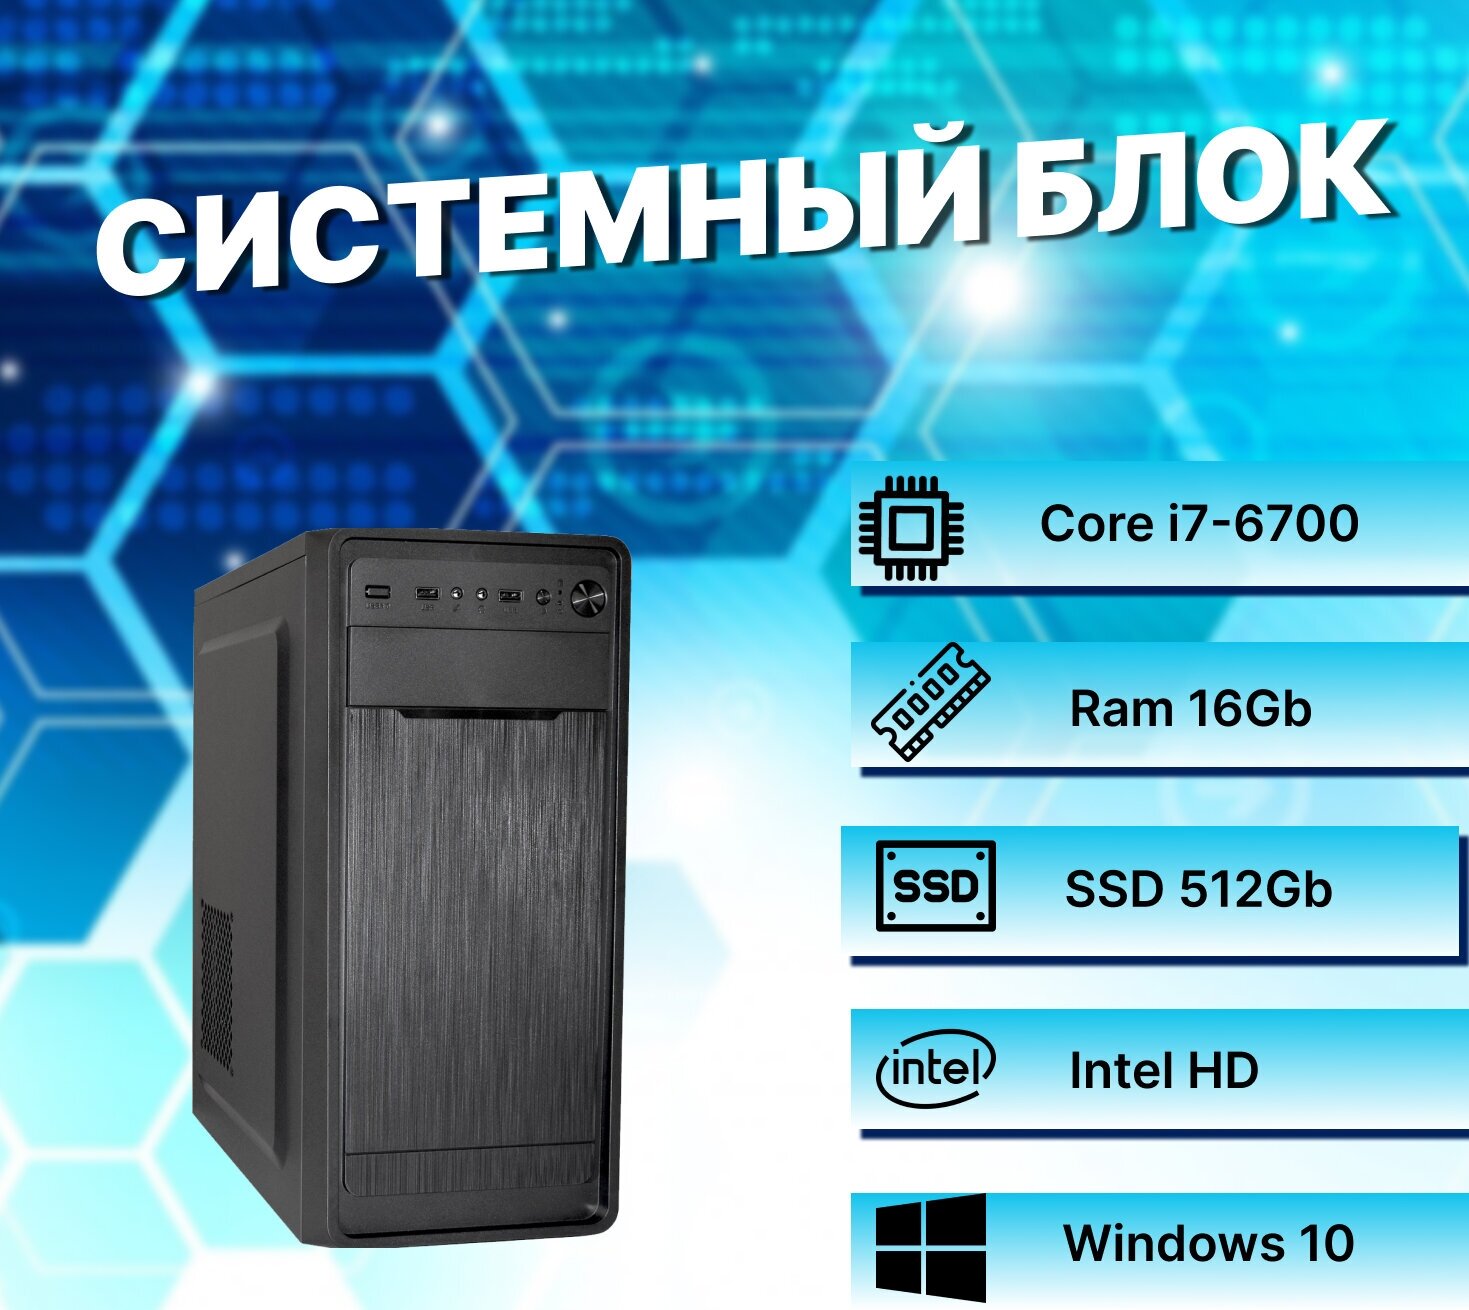 Системный блок Intel Core I7-6700 (3.4ГГц)/ RAM 16Gb/ SSD 512Gb/ Intel HD/ Windows 10 Pro